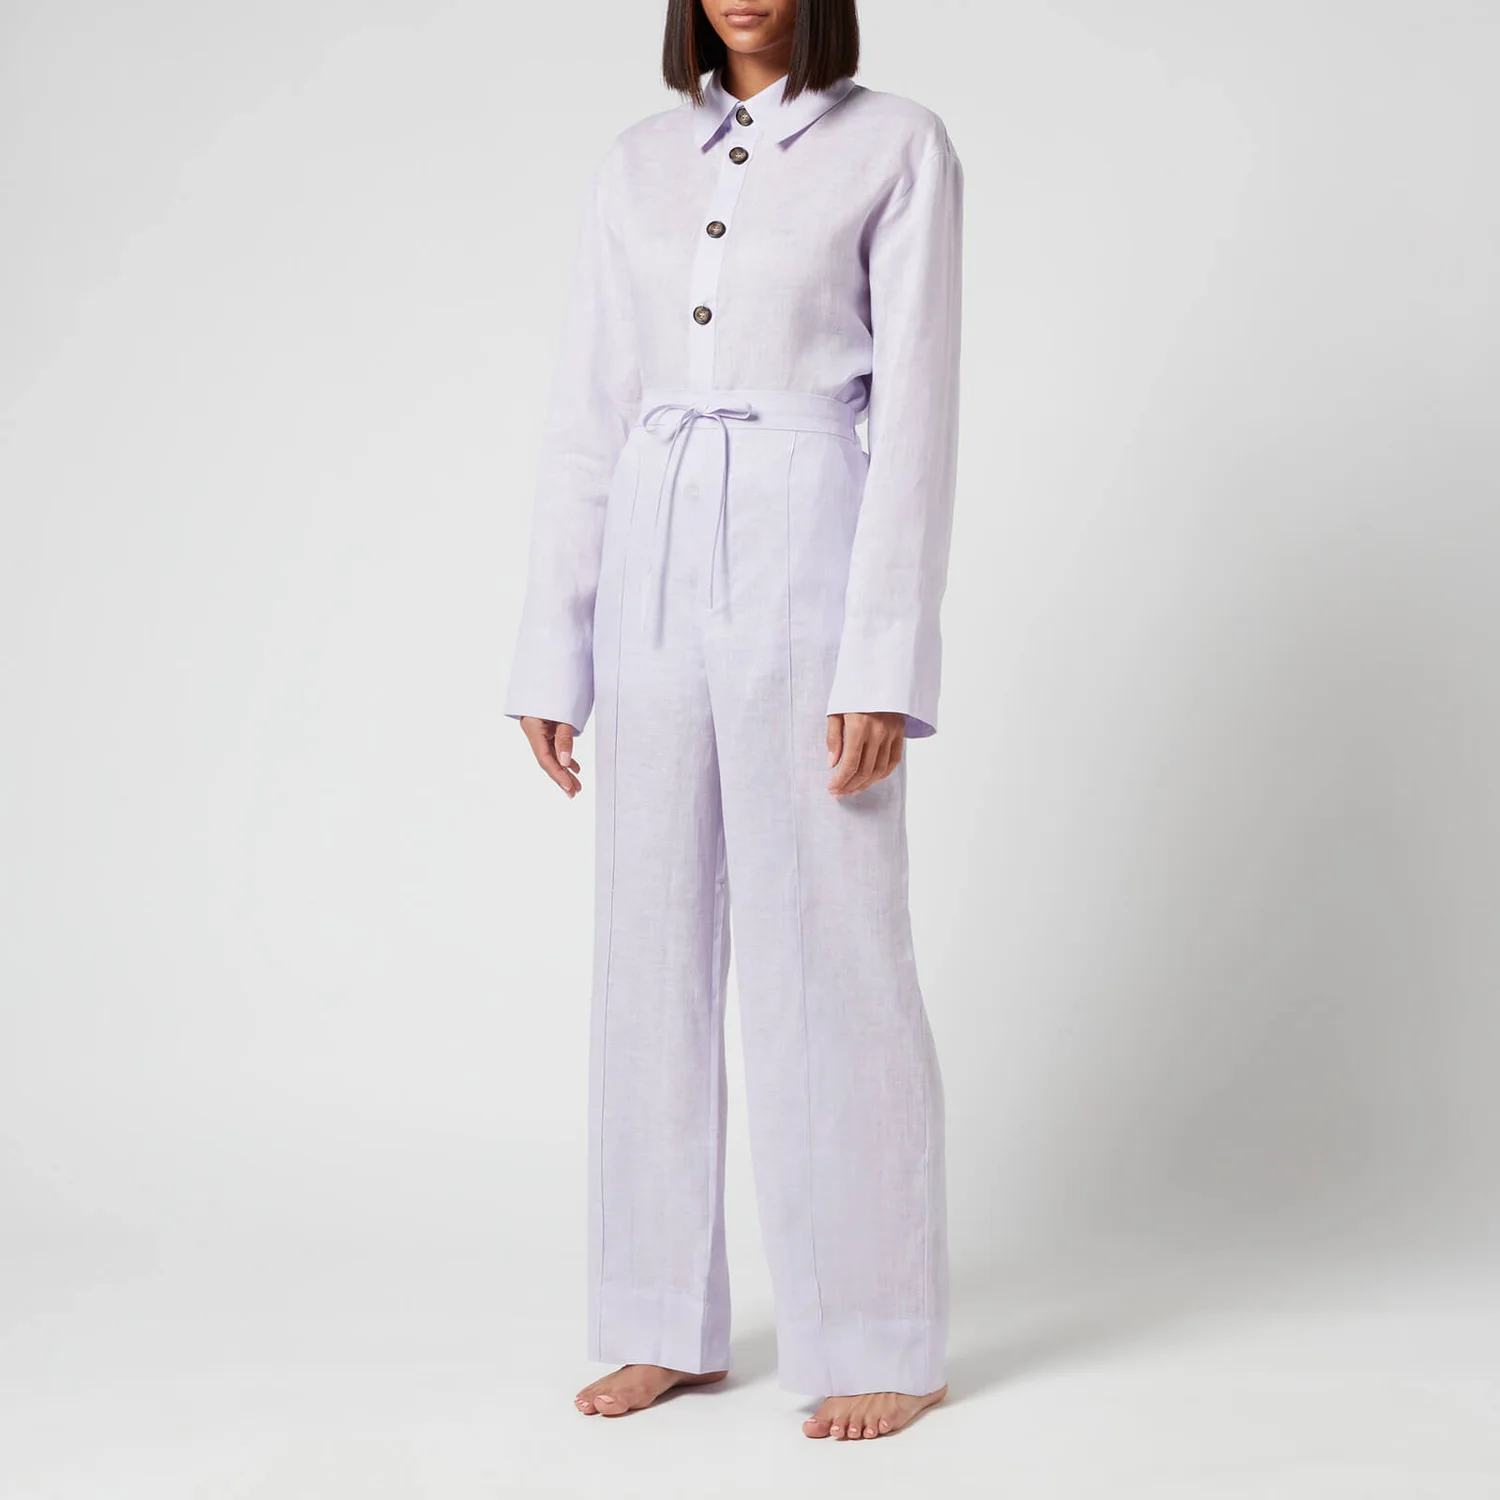 Sleeper Women's Unisex Linen Pajama Set with Pants - Lavender